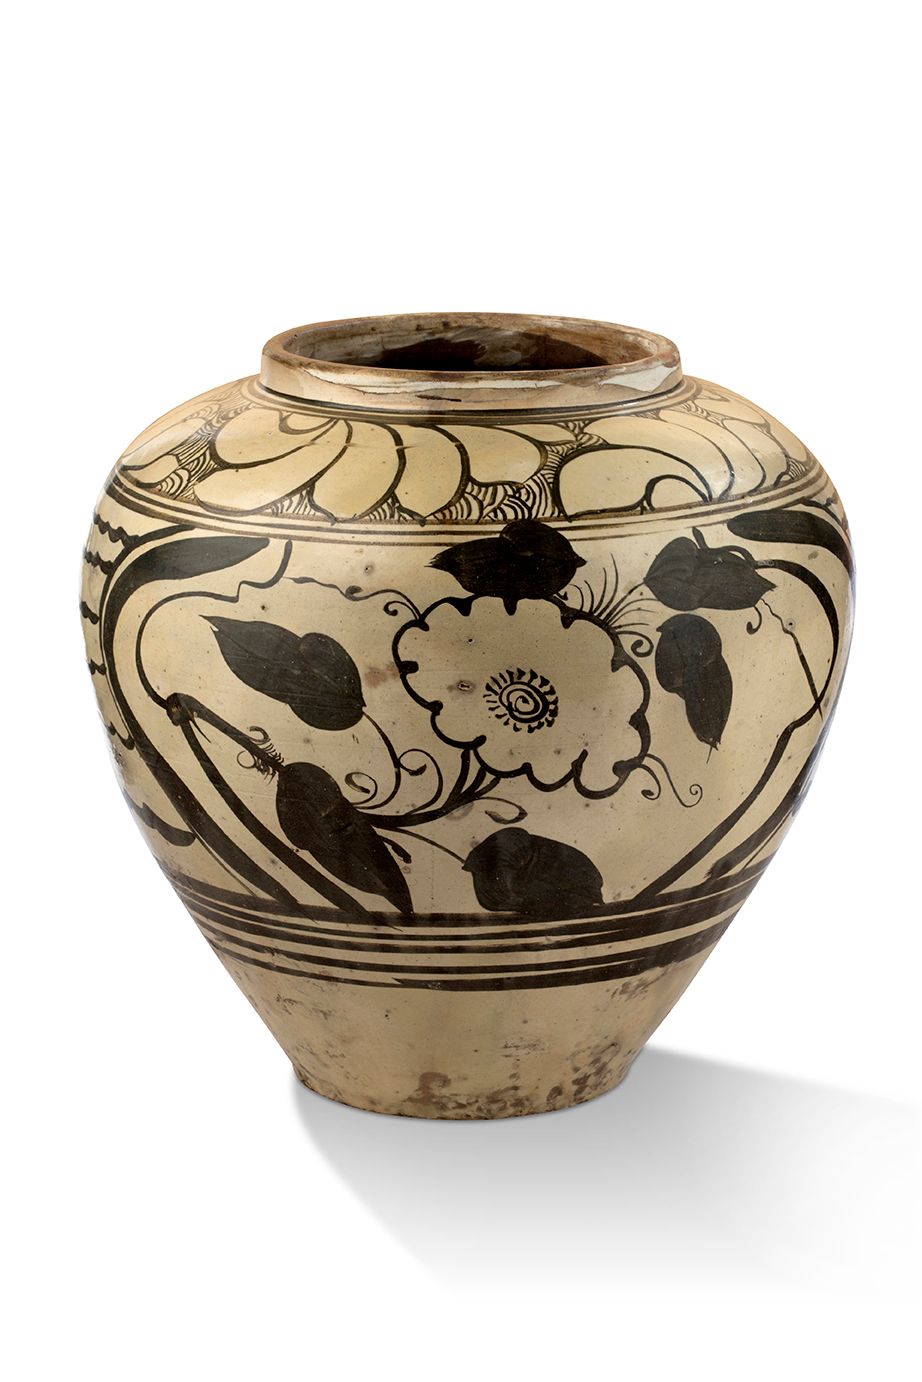 CHINE DYNASTIE YUAN (1279-1368) Gran jarra guan
De gres vidriado de Cizhou, el c&hellip;